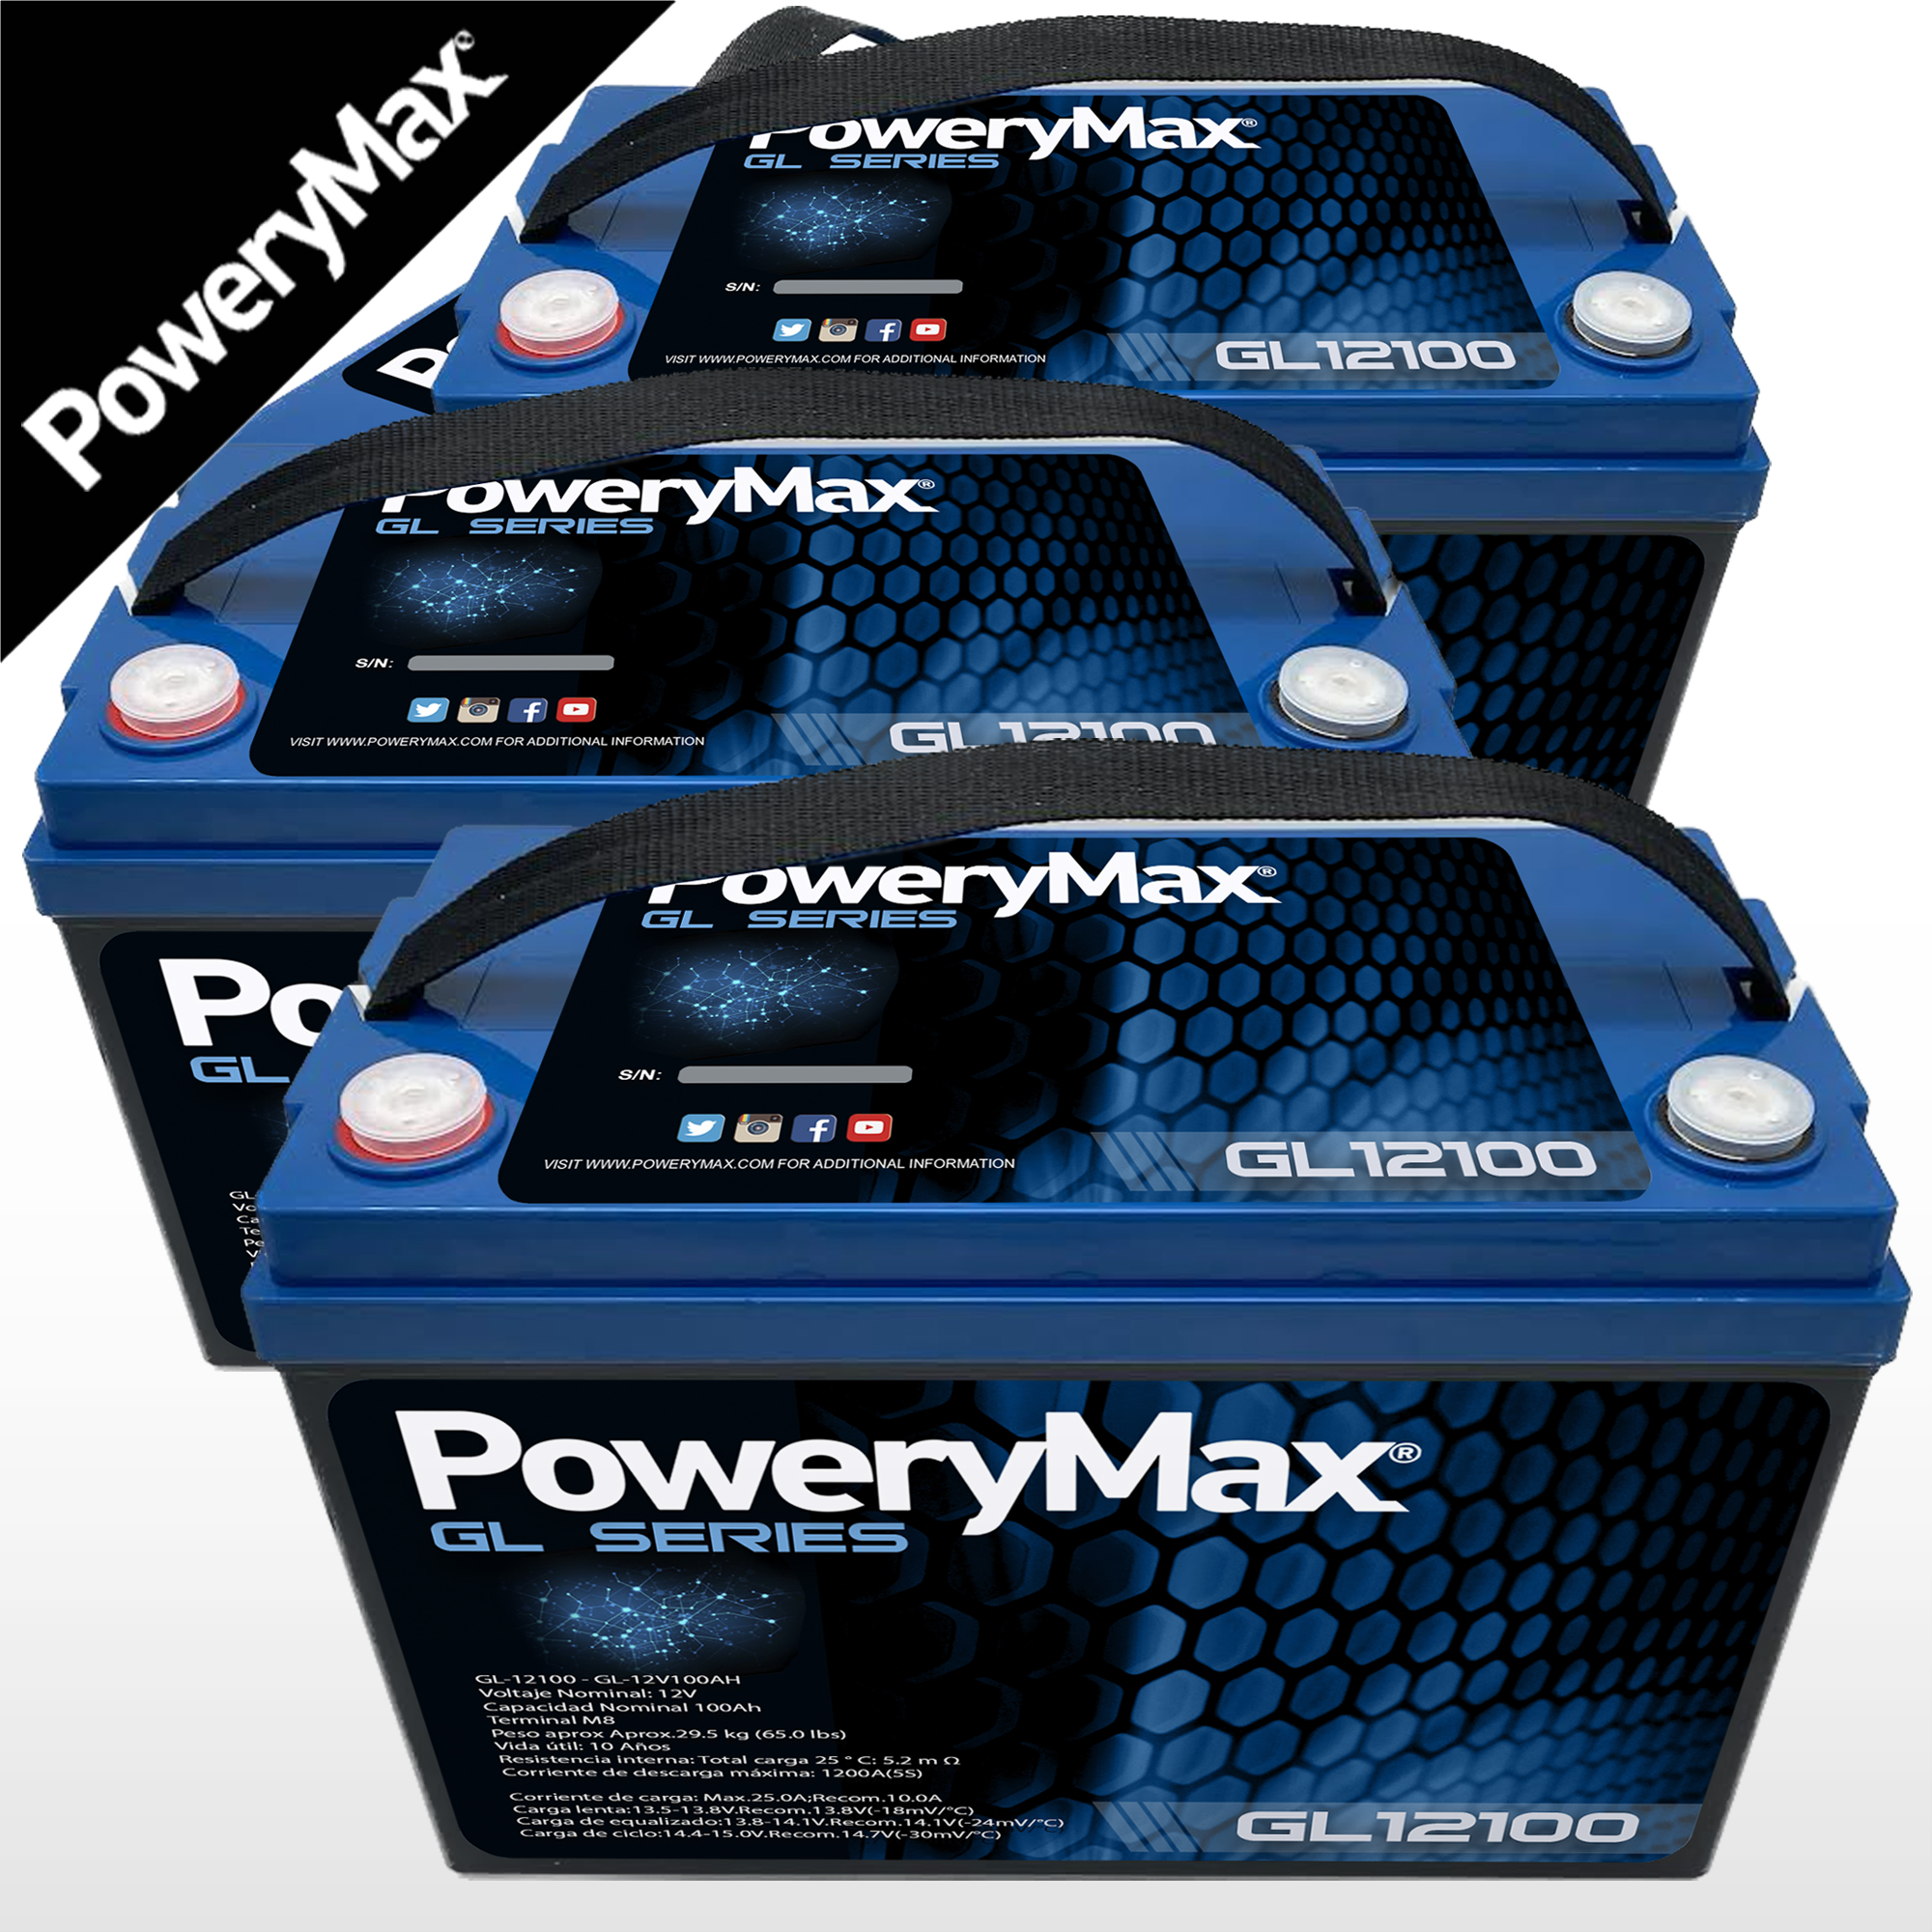 Batería de Gel 36V 100Ah PoweryMax GL36100. ONNautic